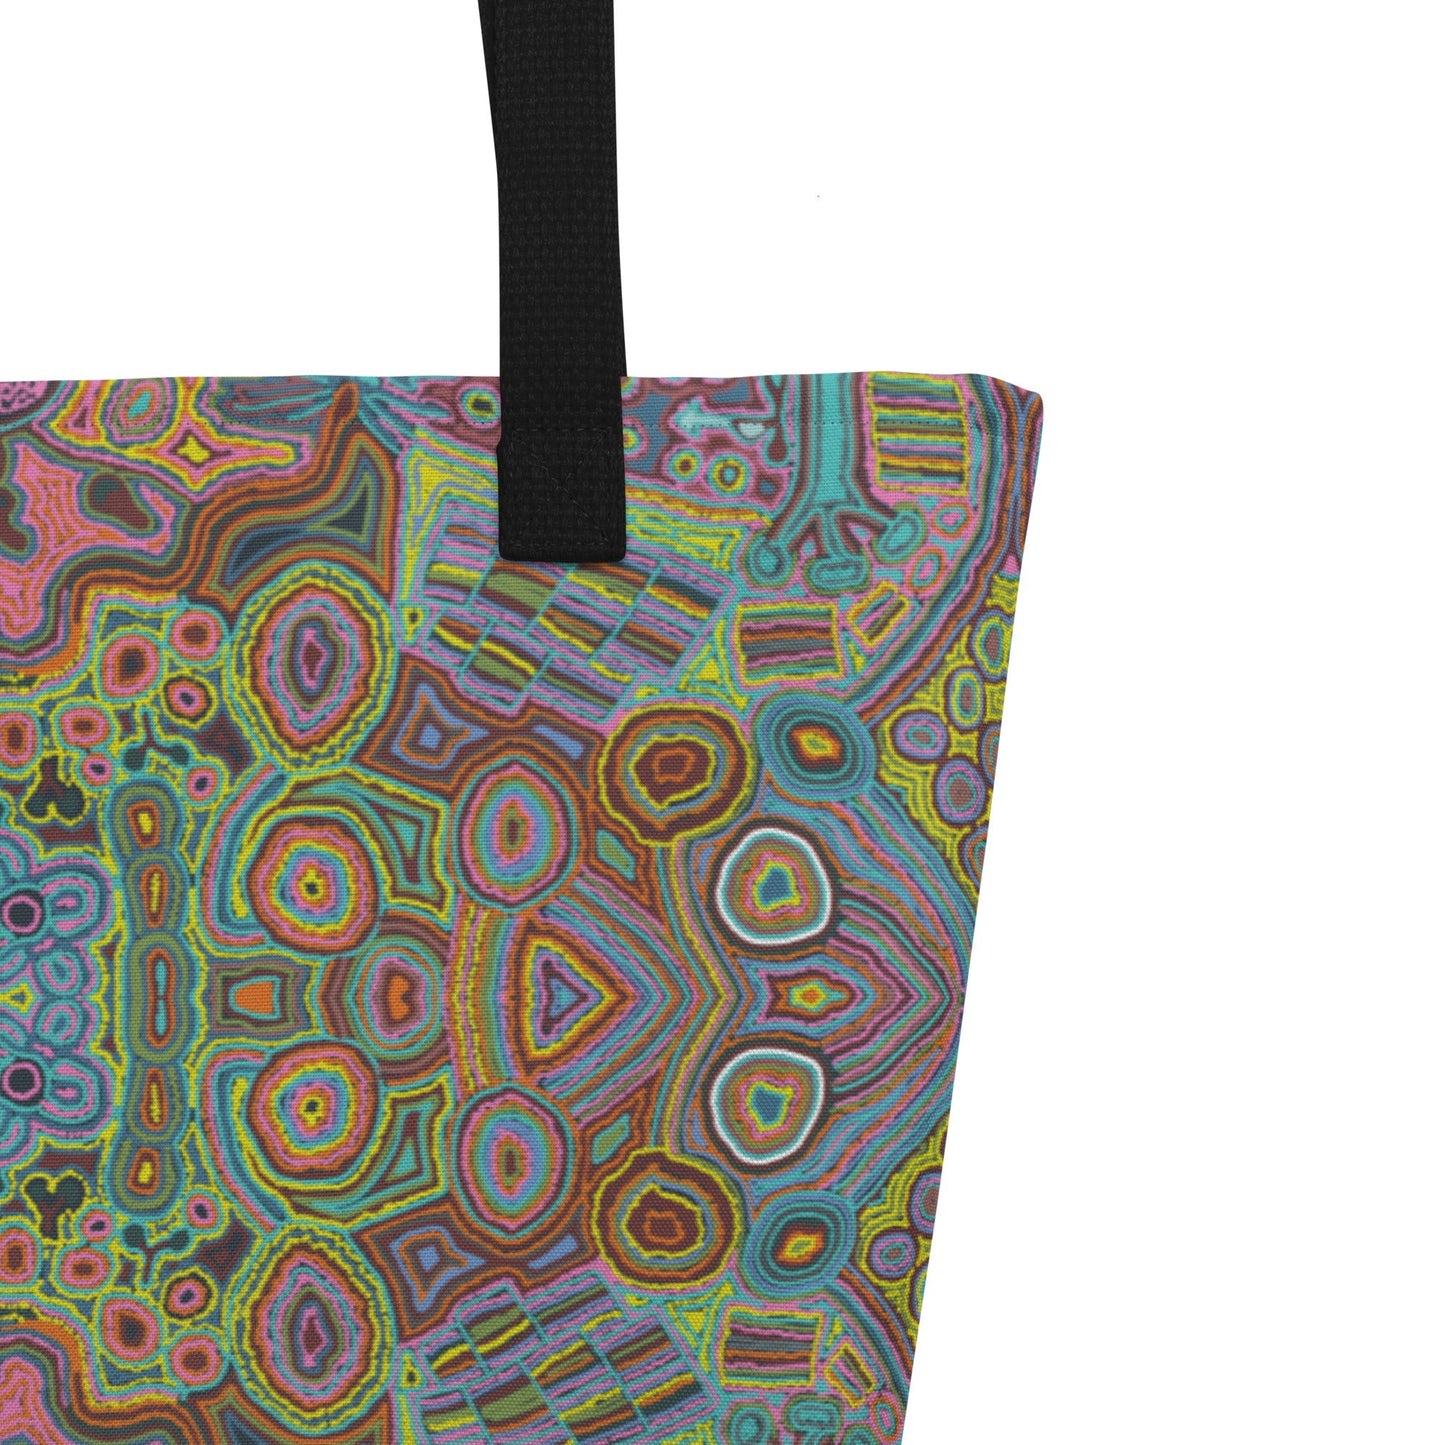 Ninu Large Beach Tote Bag with pocket - by Veronica Reid - Milpali Tote Bag